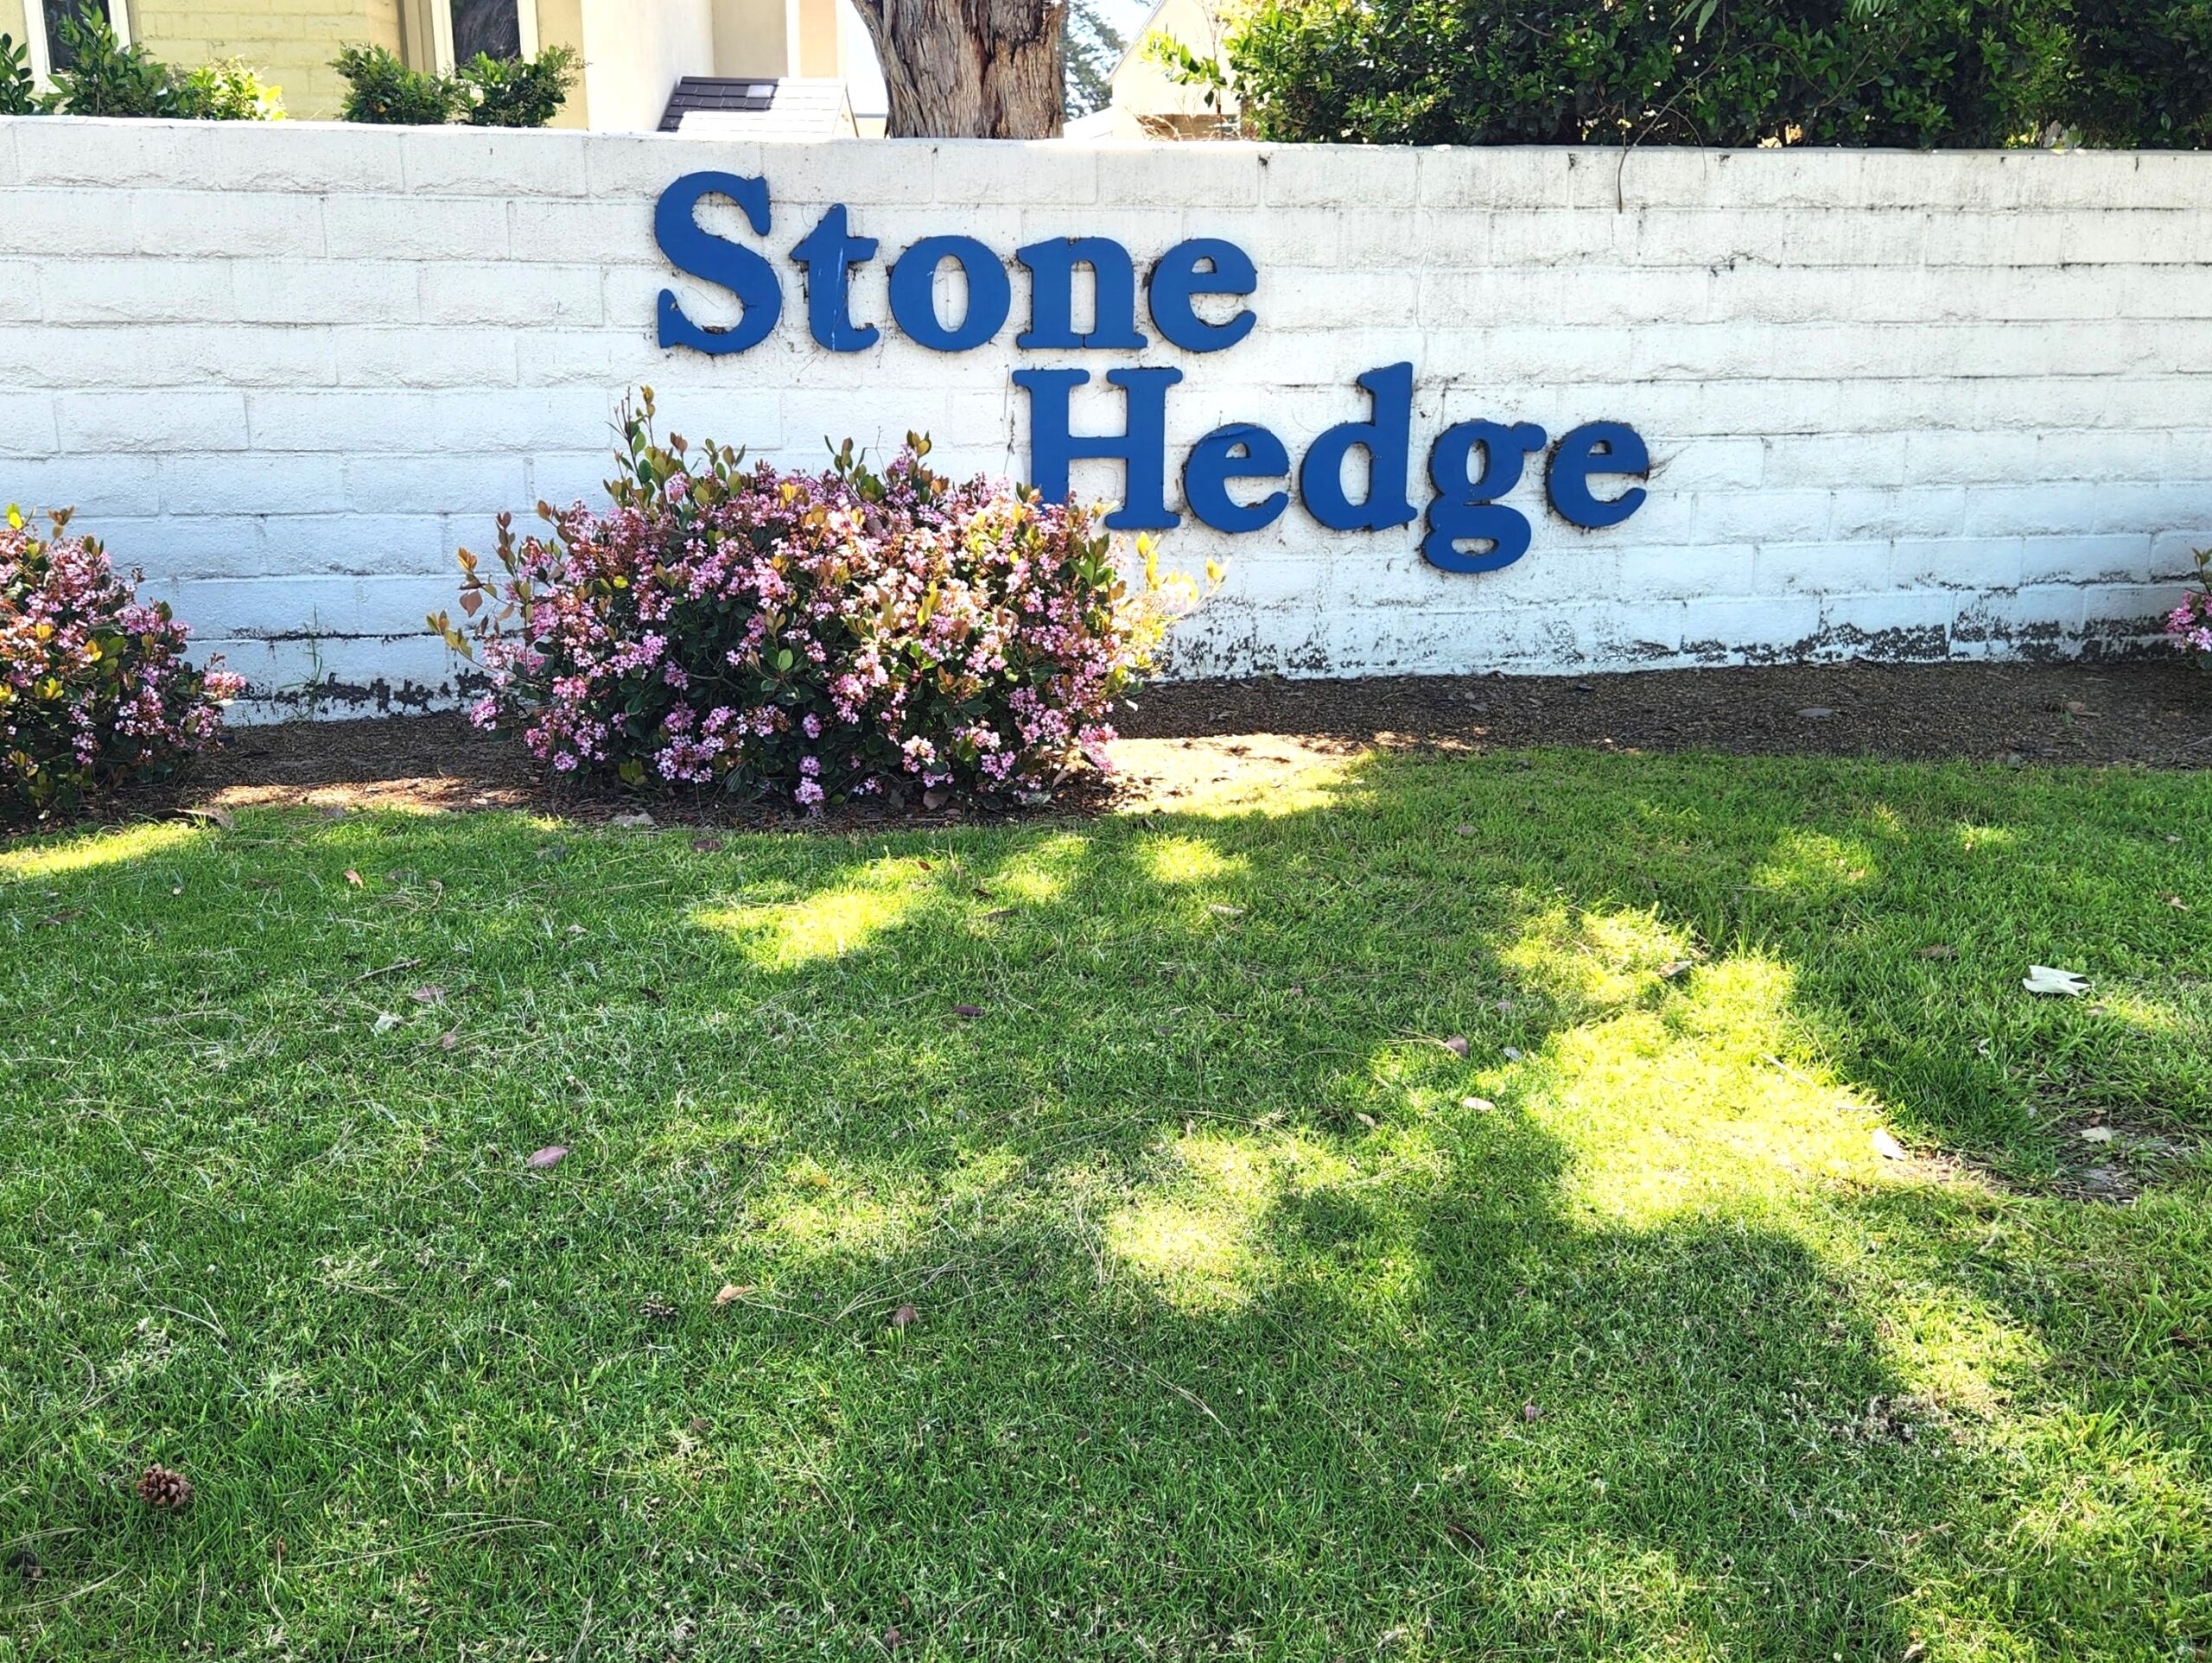 Stone Hedge, Ventura